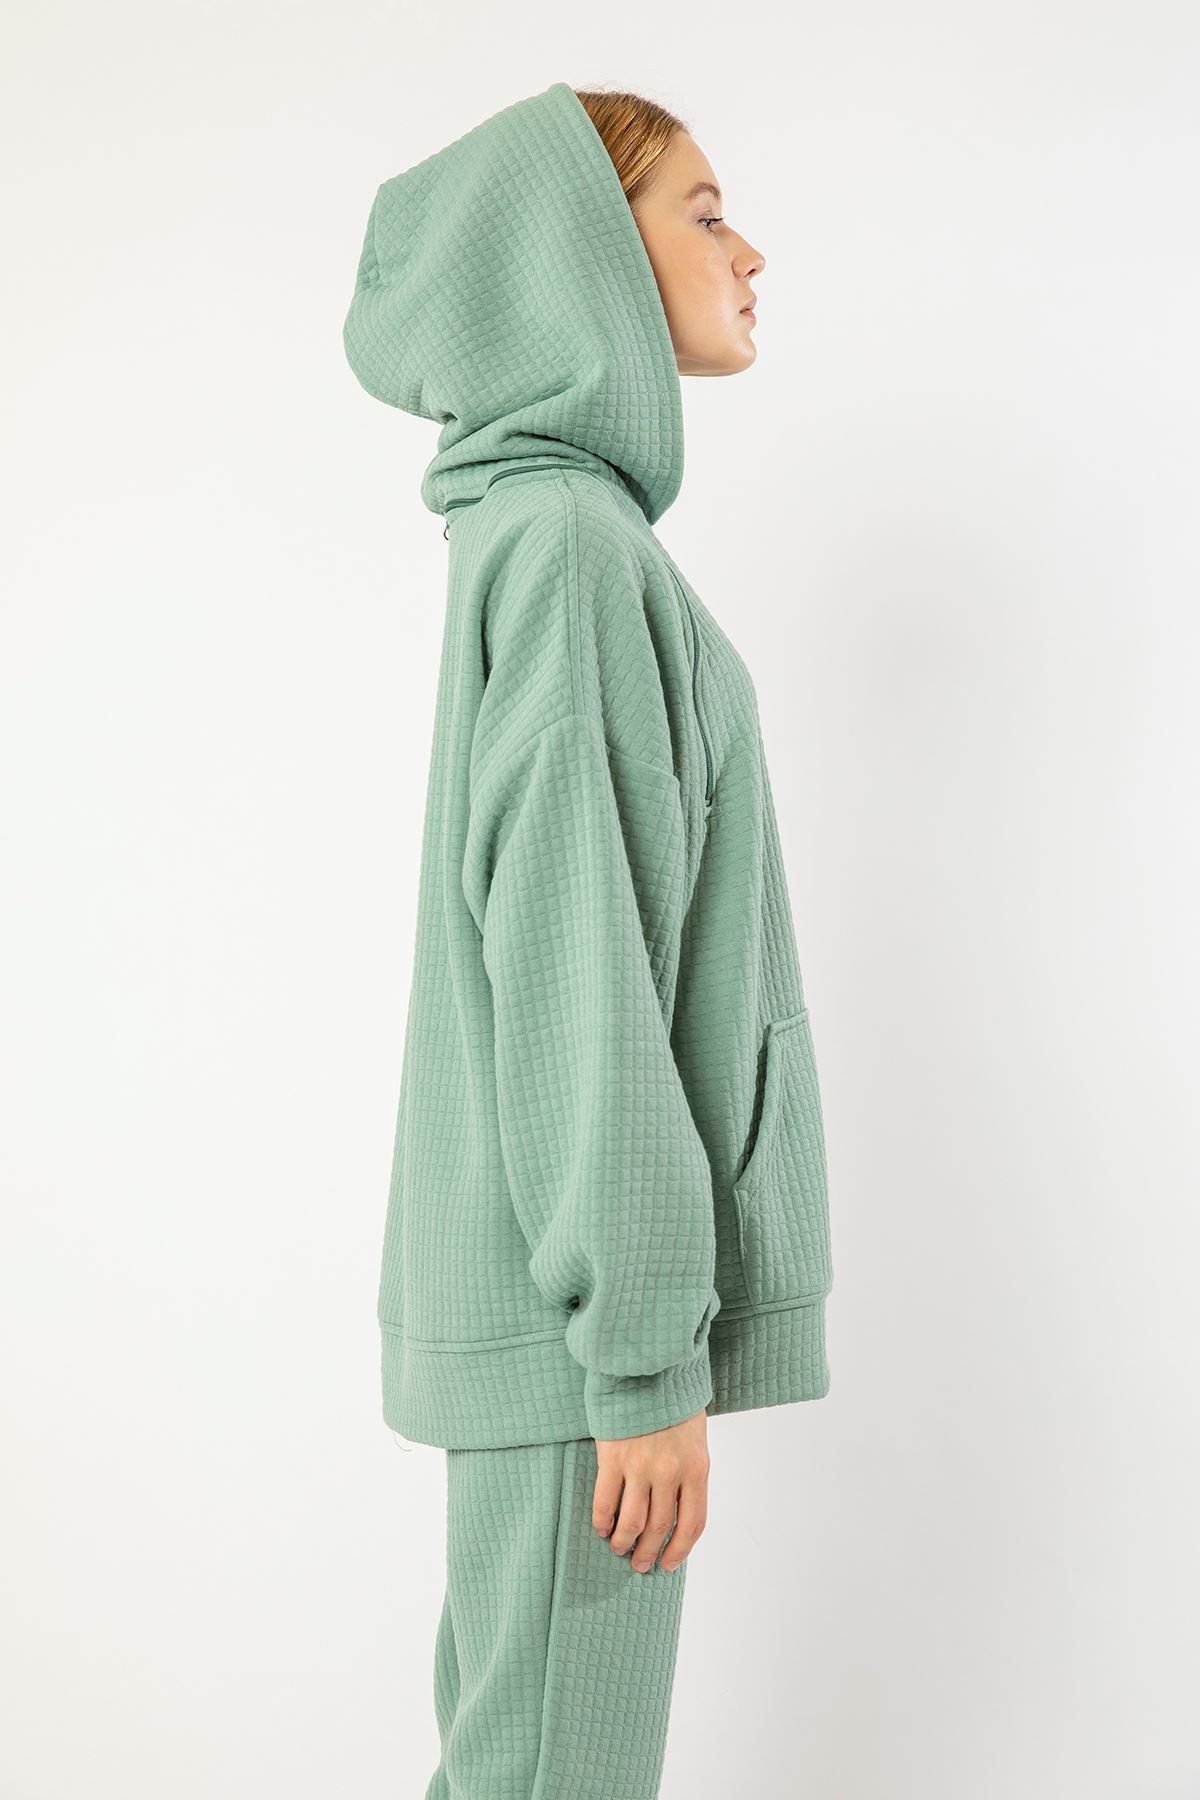 Quilted Fabric Hooded Hip Height Oversize Zip Detailed Women Sweatshirt - Mint